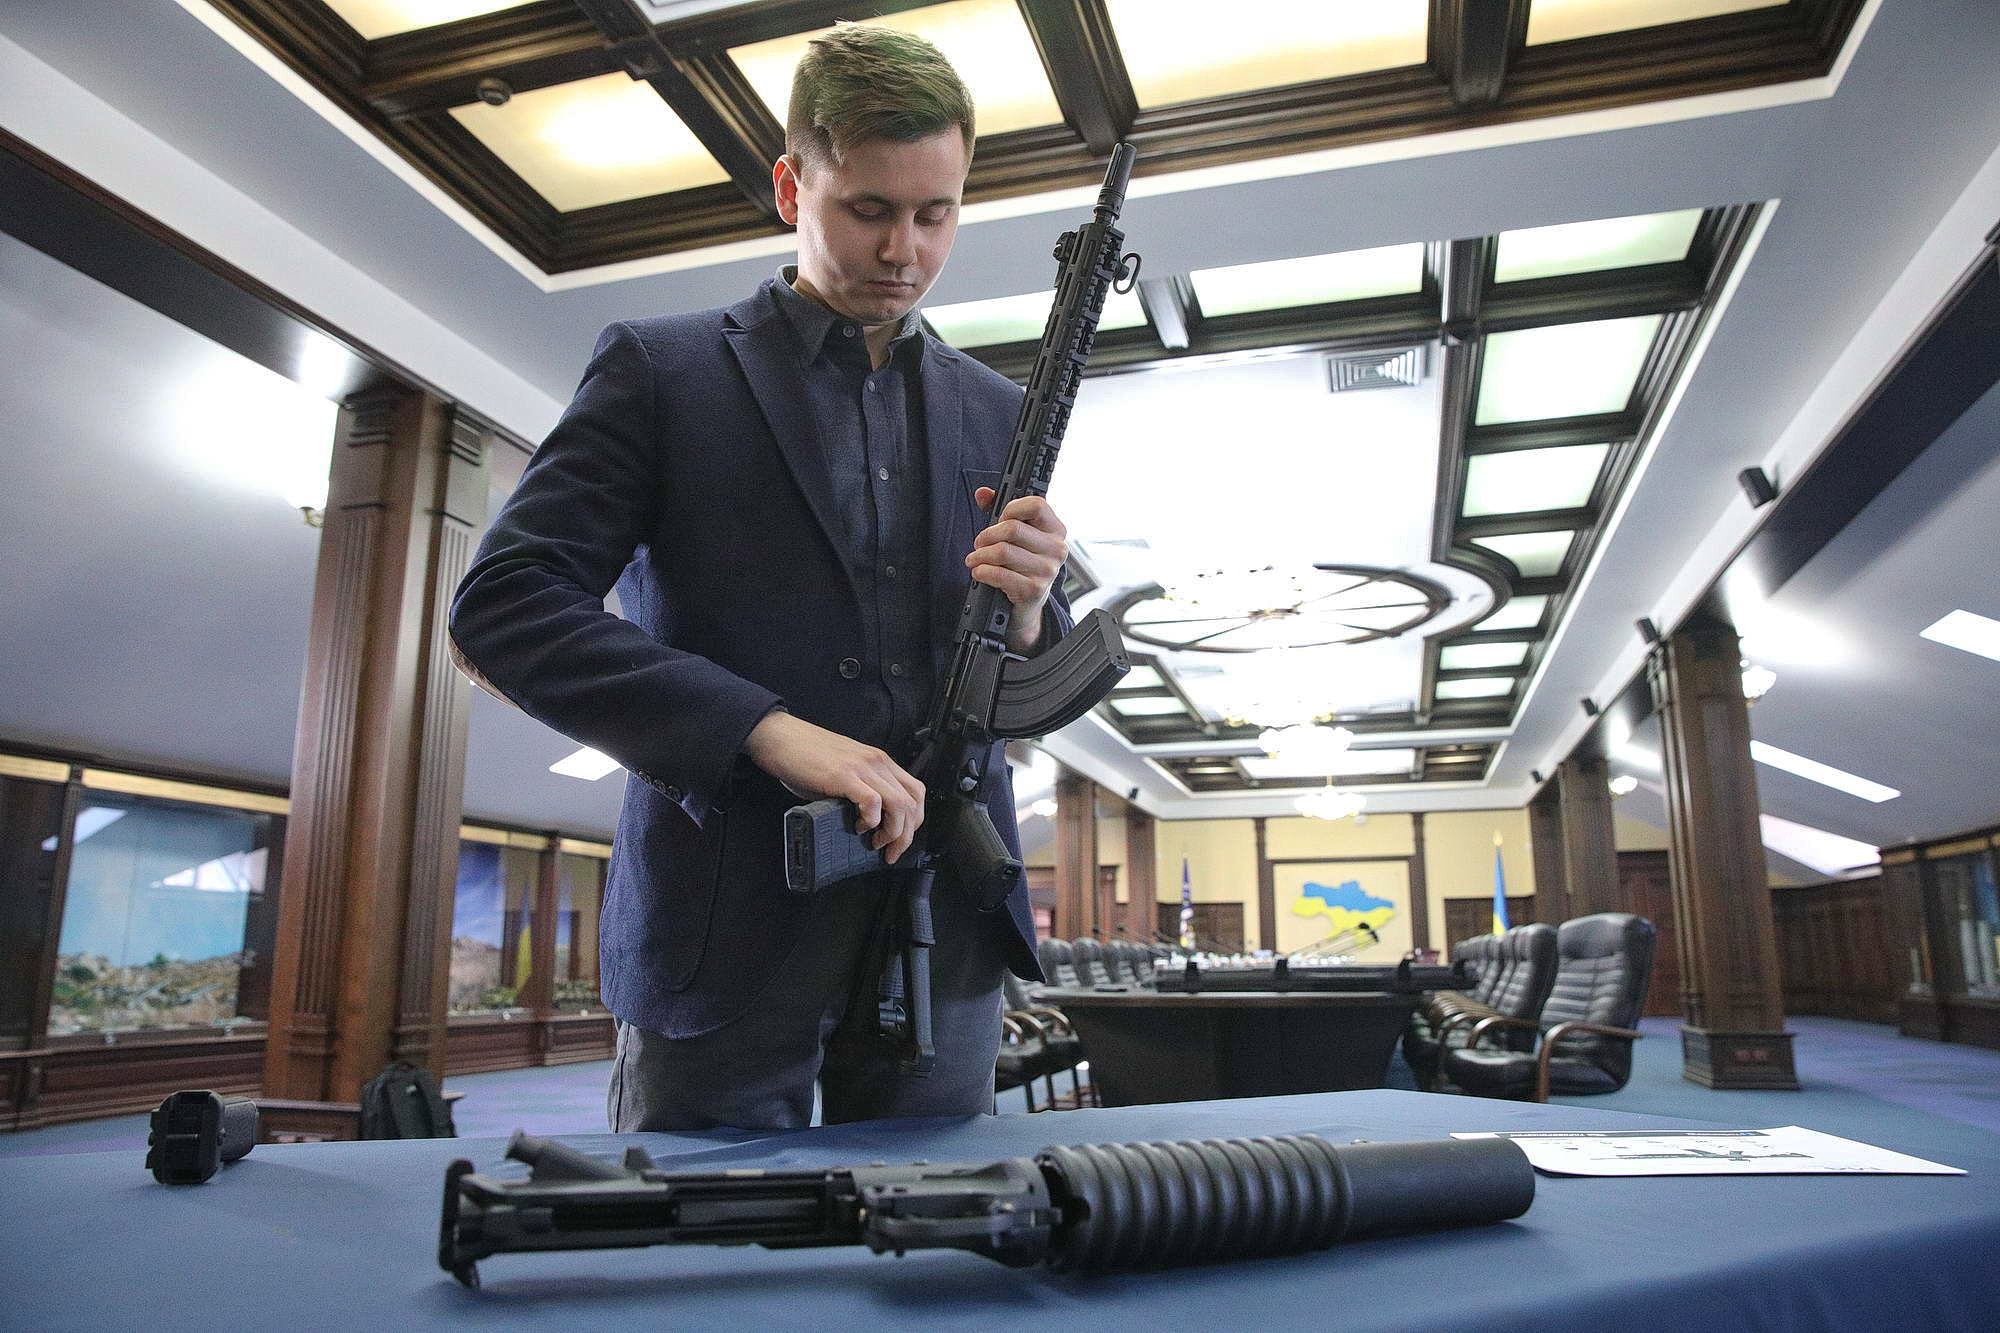 The UkrOboronServis defense company respresentative Sergiy Zhydkov dismantles an M4-WAC47 rifle in Kyiv on Jan. 24.